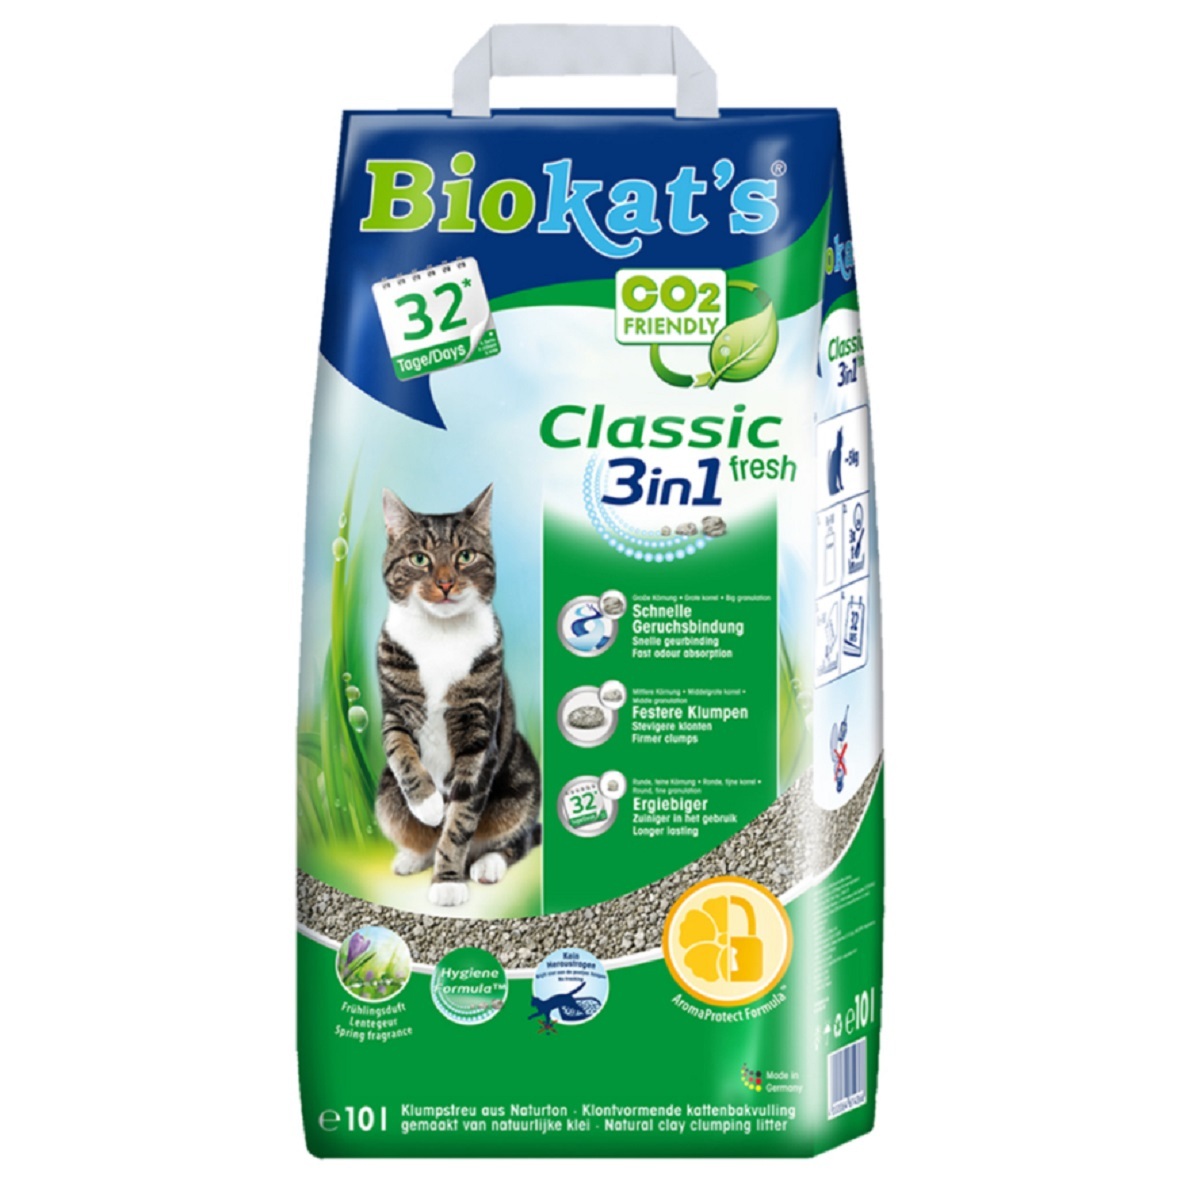 Biokat's Classic 3 in 1 kattenbakvulling